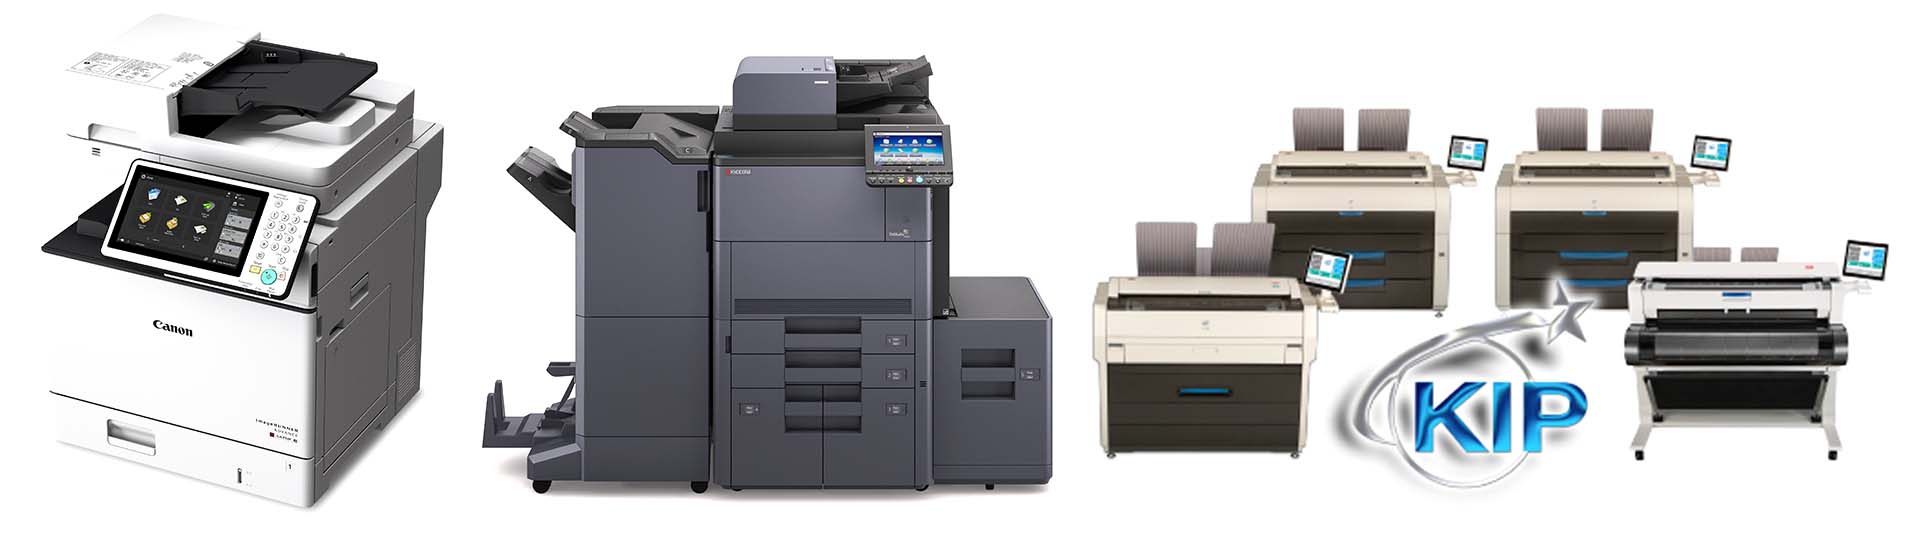 Digital Printers and Scanners in Taylor, MI